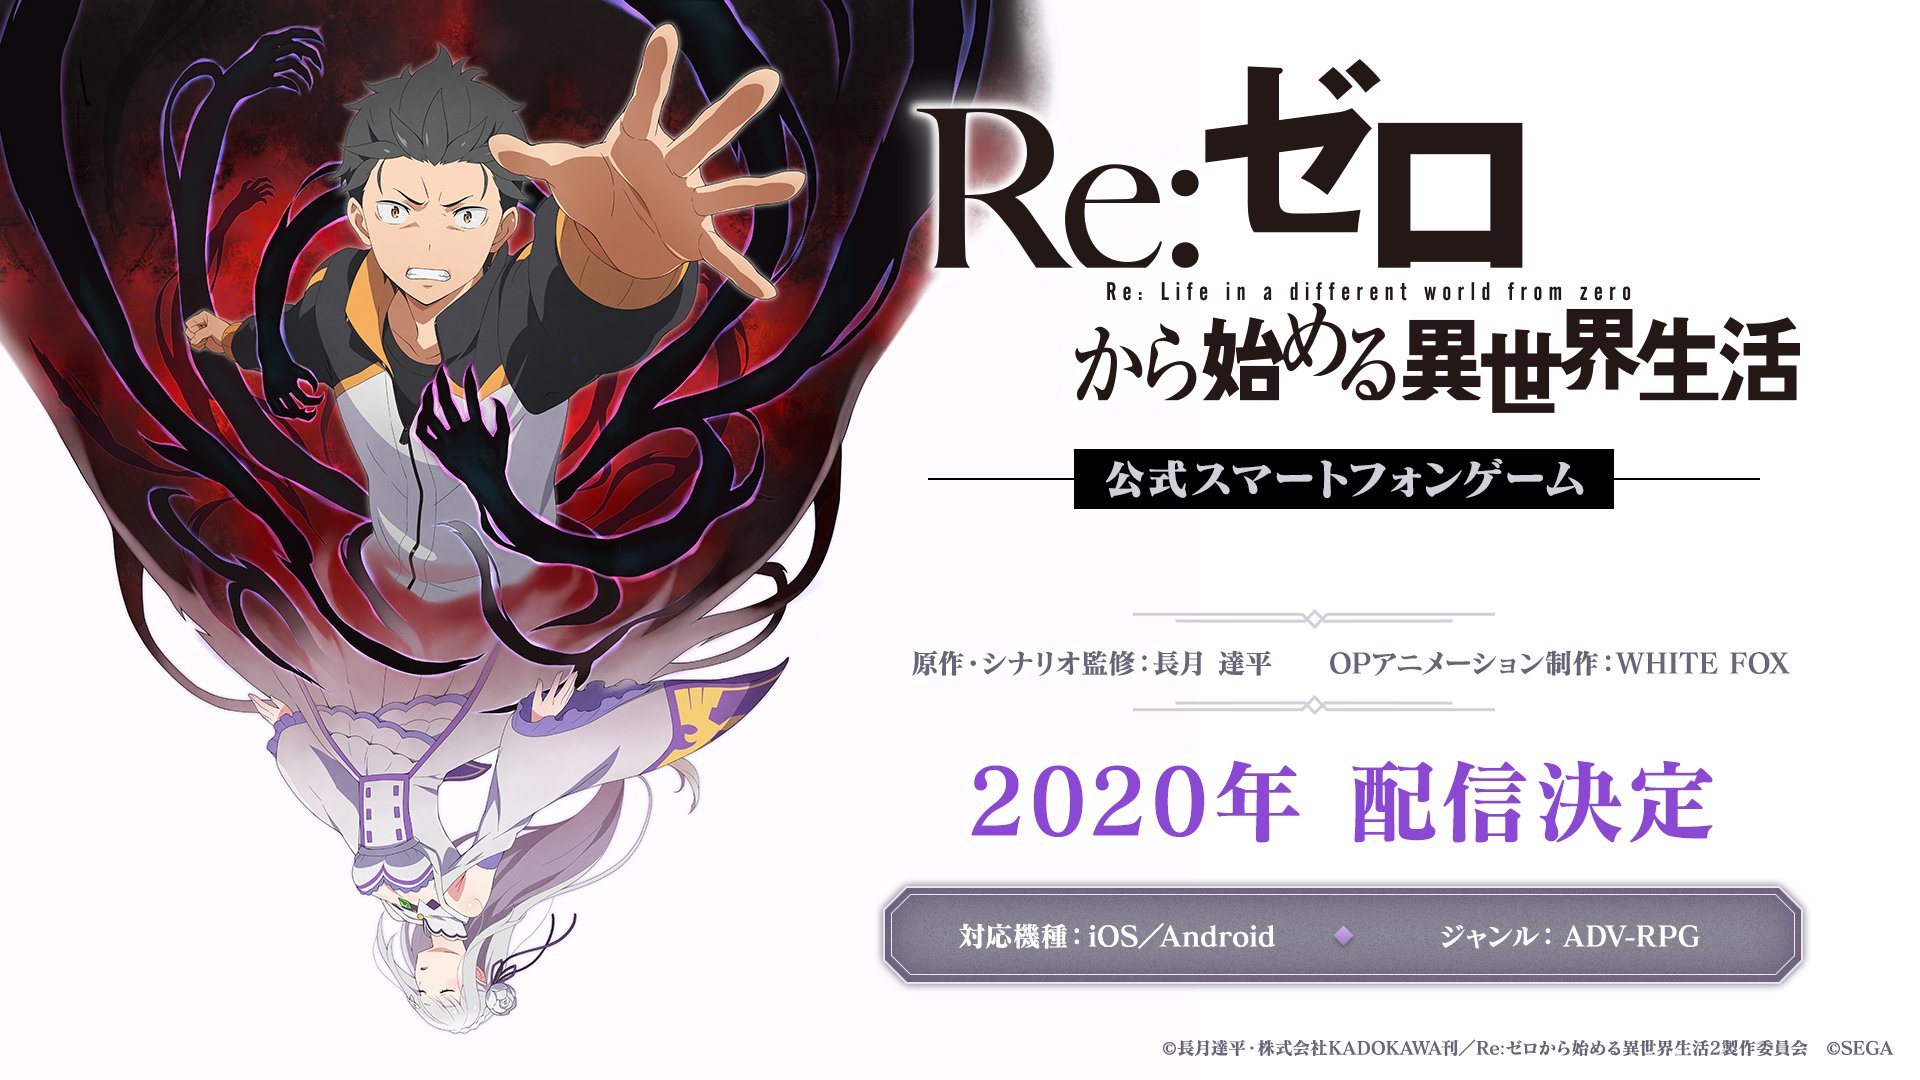 《Re:从零开始的异世界生活》官方手游公开 2020年上线